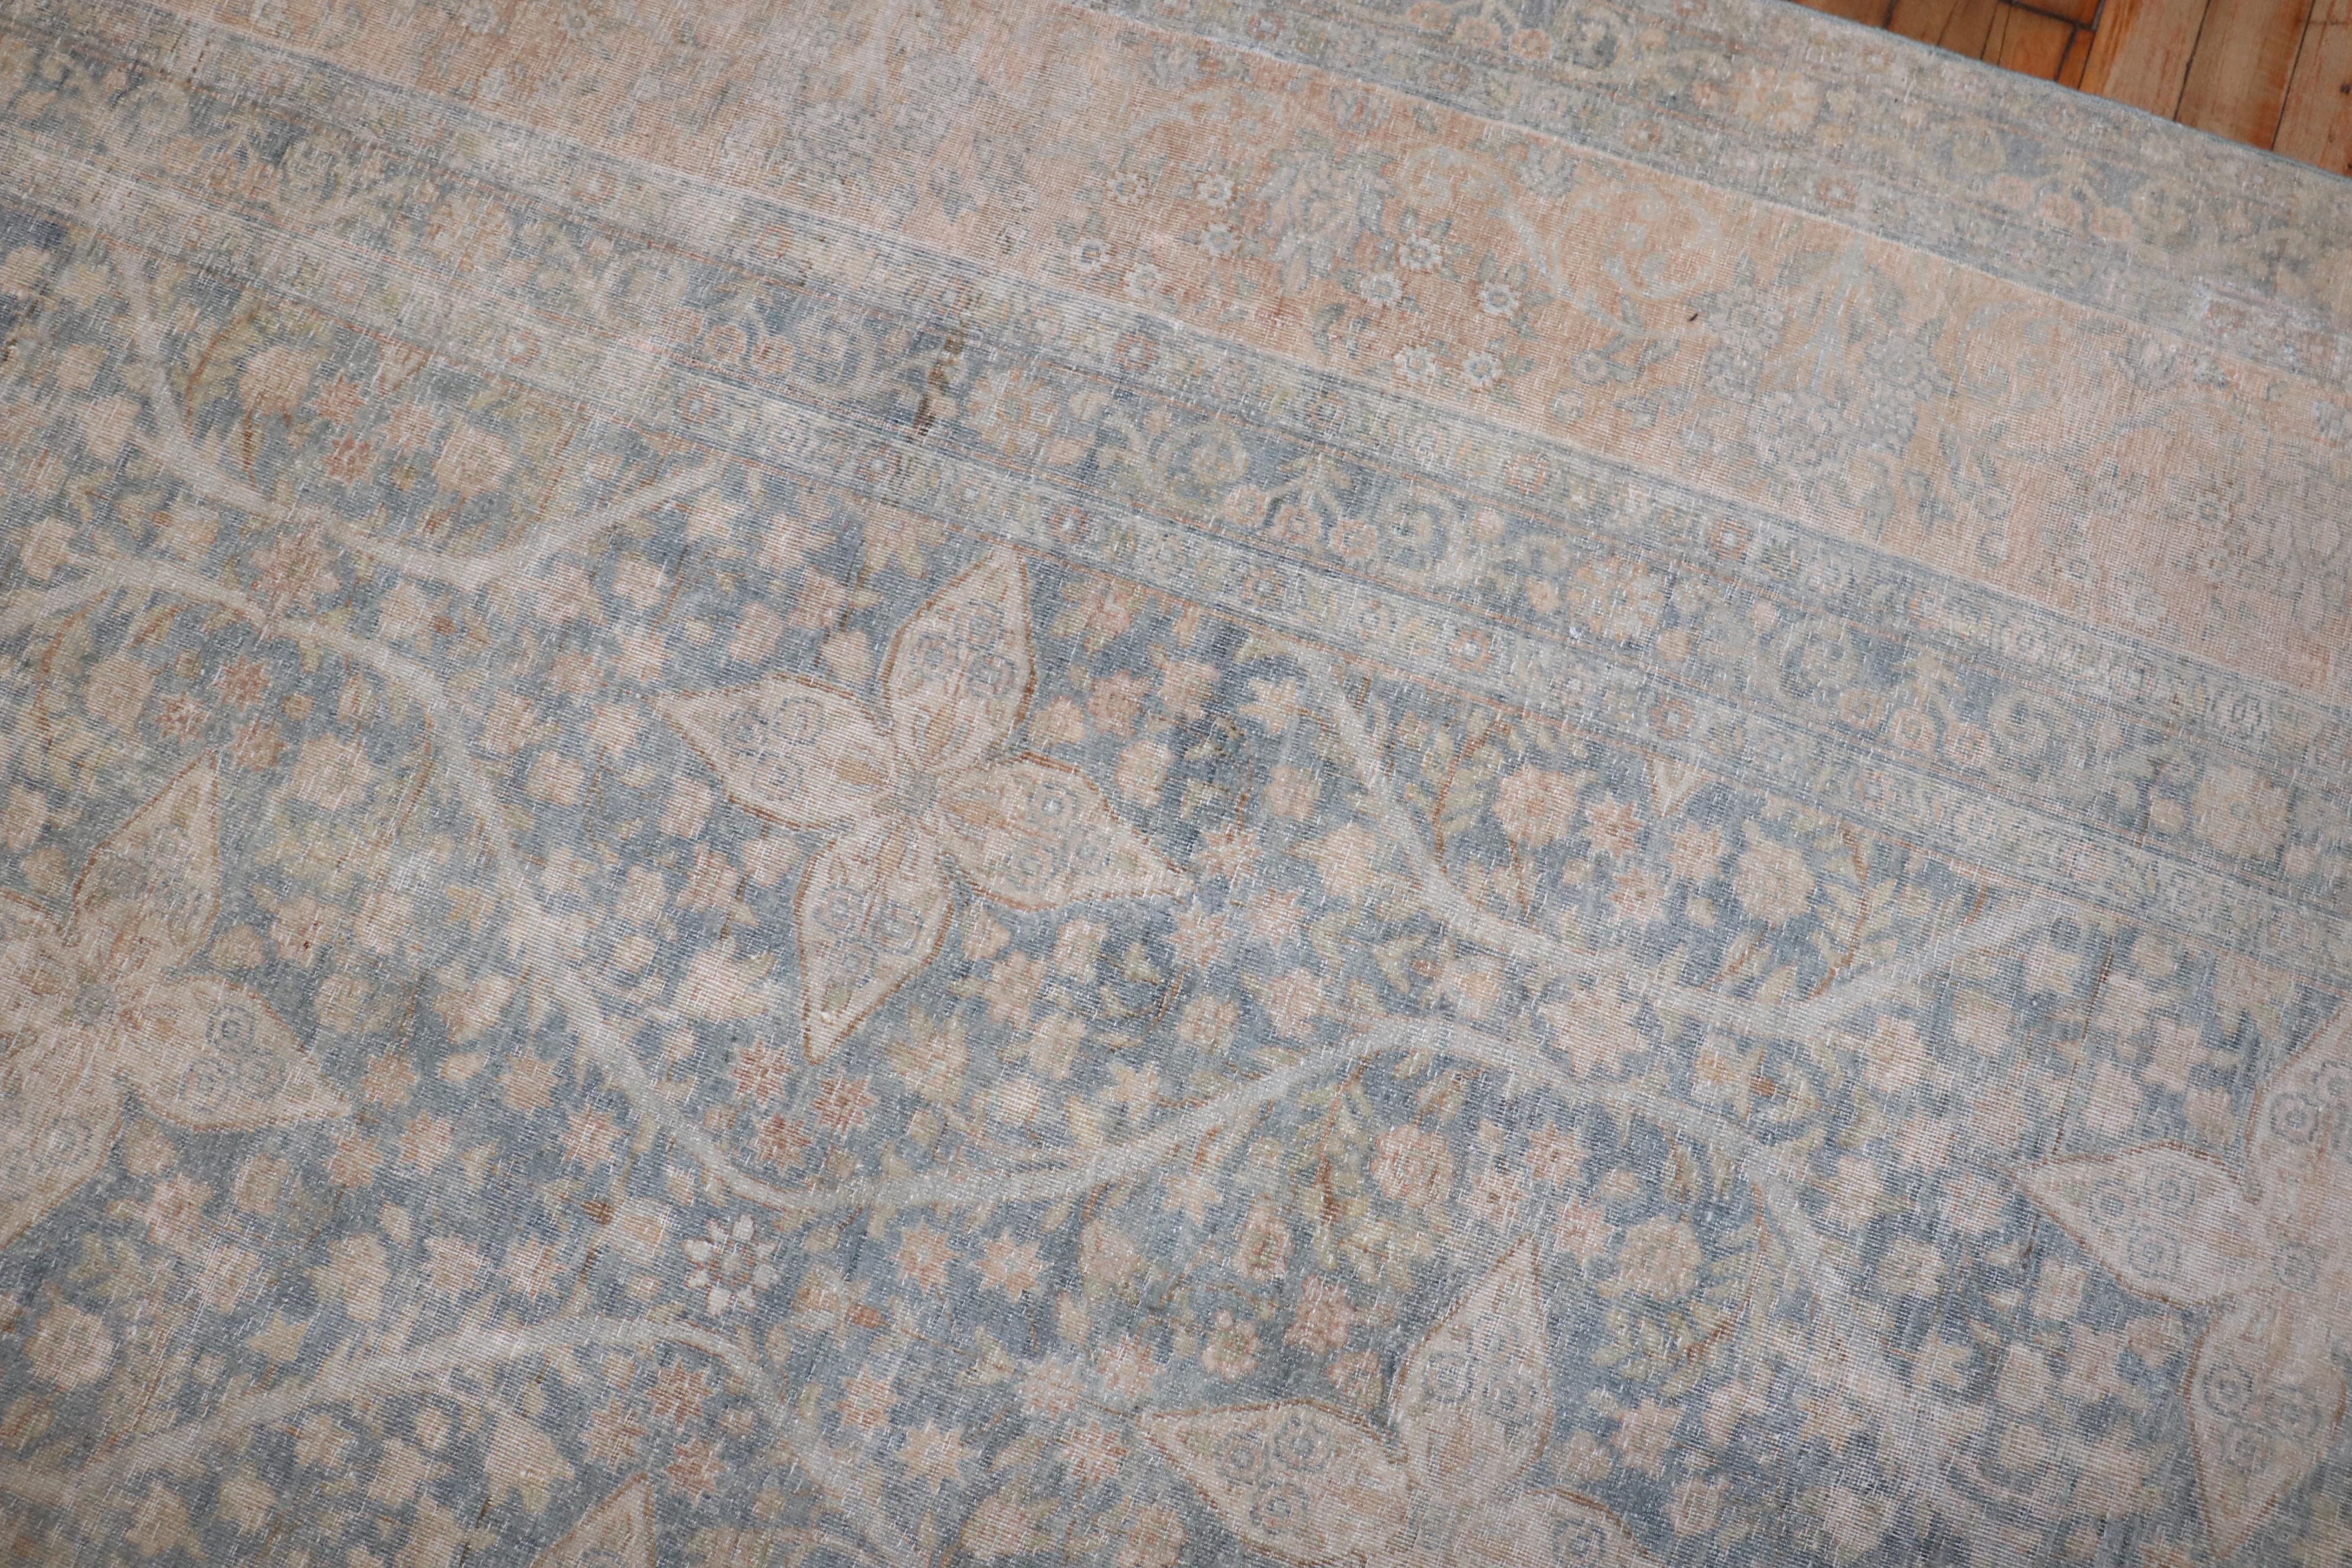 Zabihi Collection Exquisite Oversize Antique Persian Kerman Carpet  For Sale 2